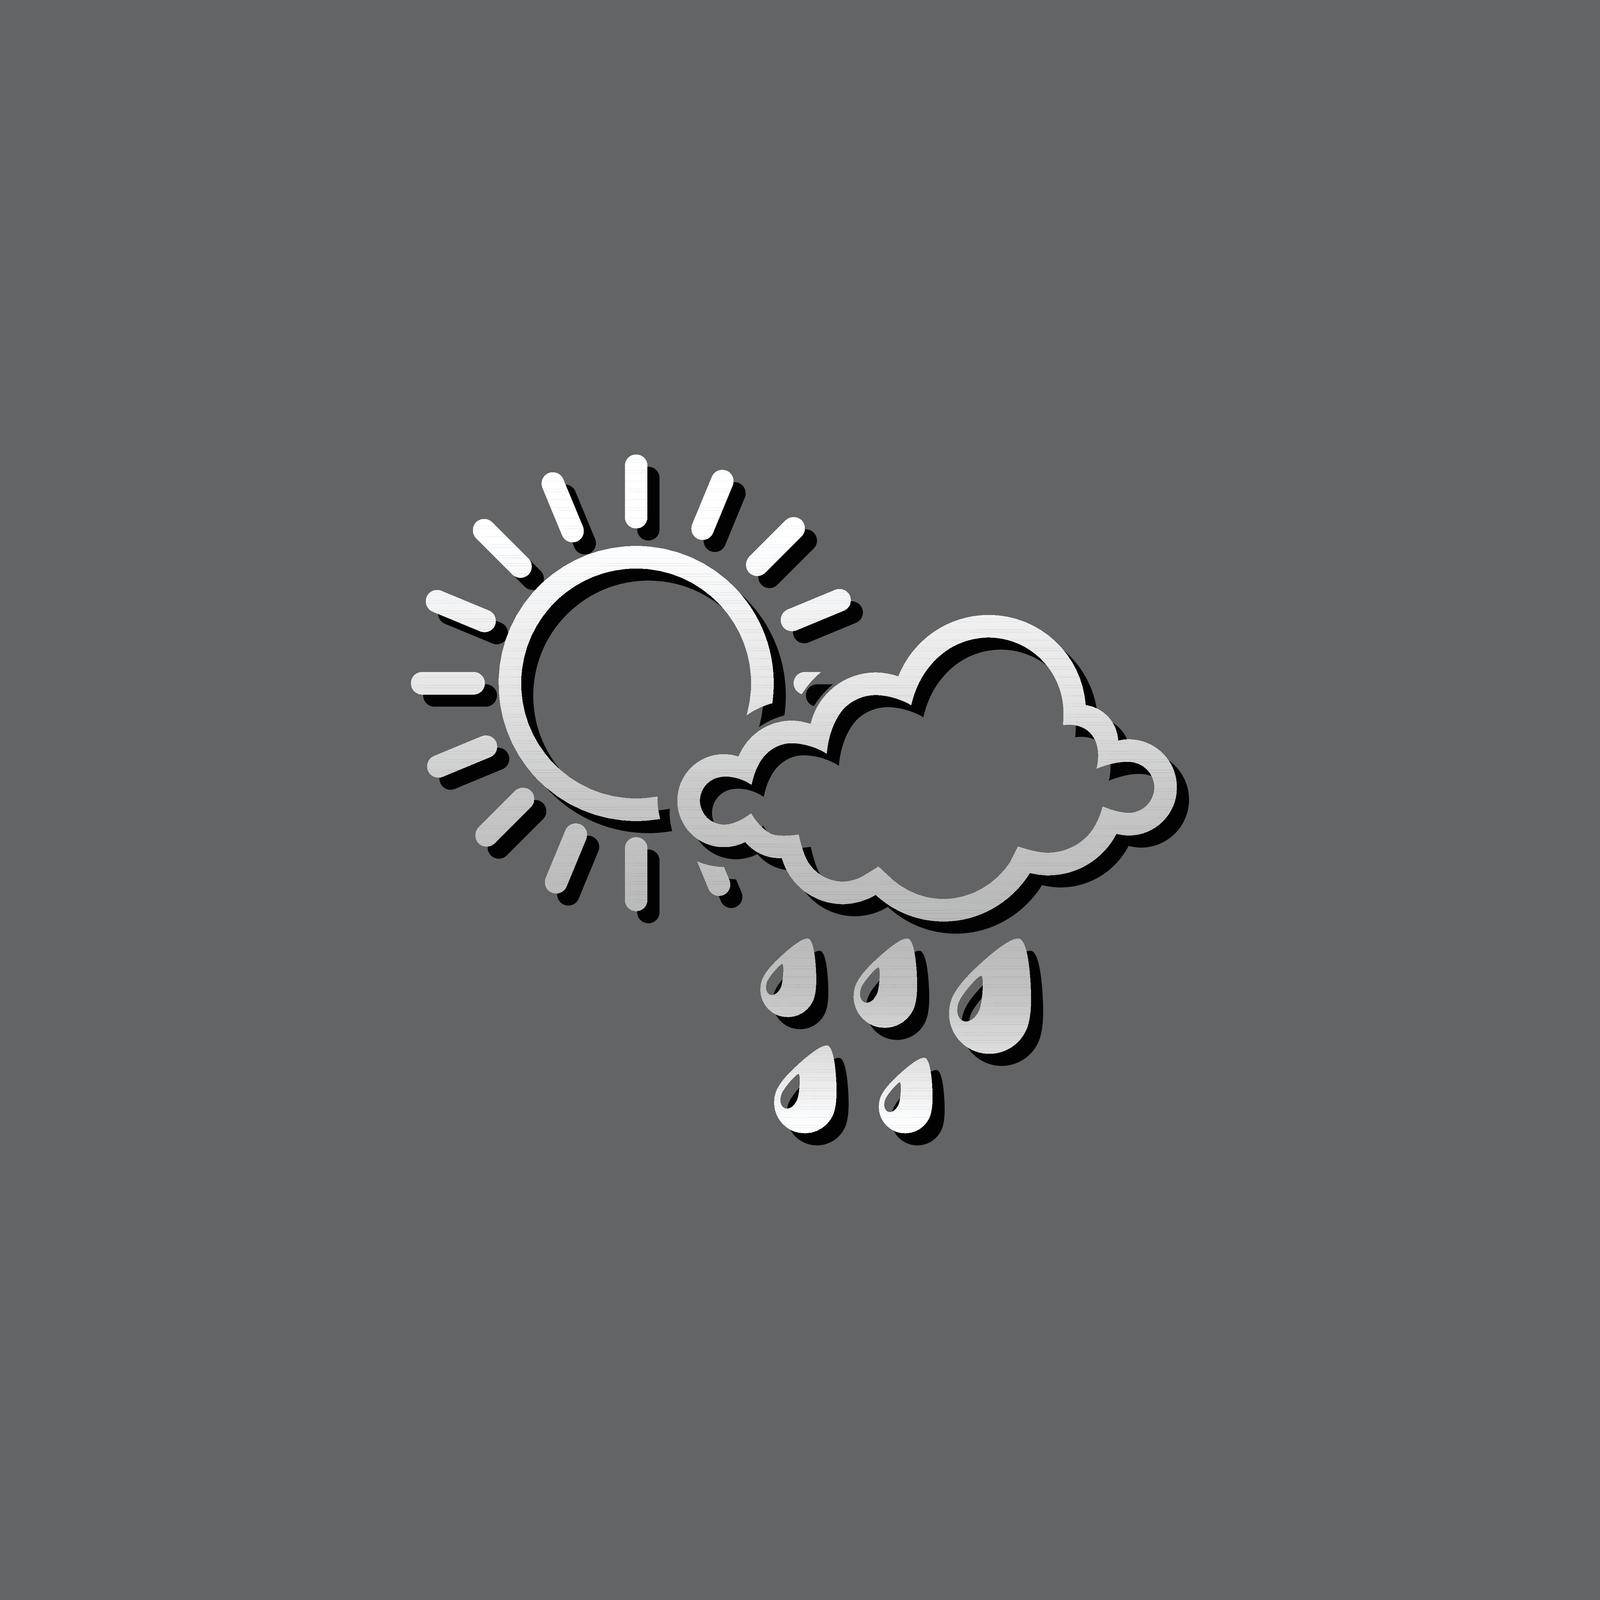 Weather overcast partly rain icon in metallic grey color style. forecast raining season monsoon